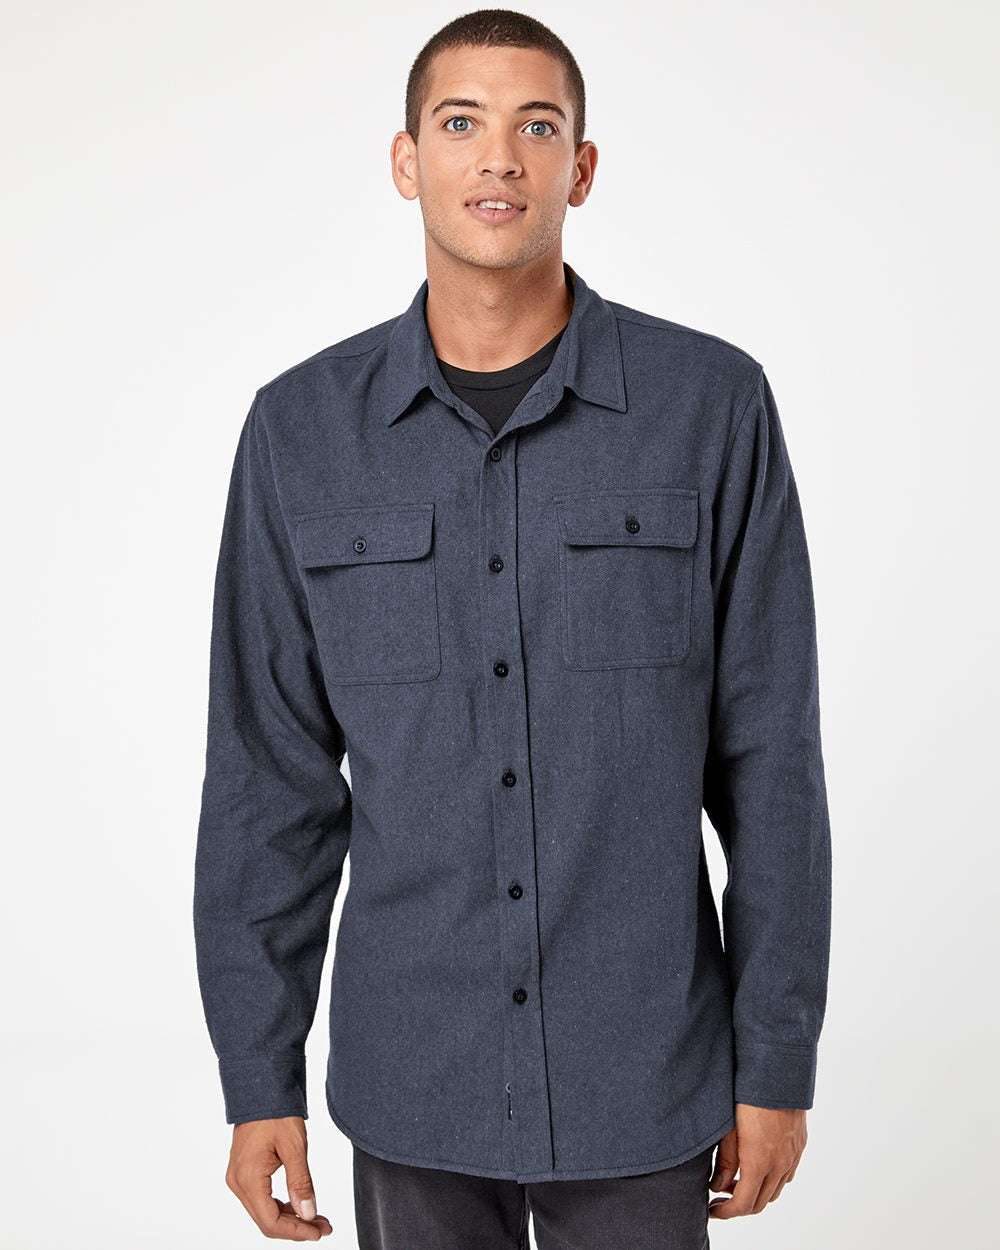 Burnside Solid Long Sleeve Flannel Shirt 8200 Burnside Solid Long Sleeve Flannel Shirt 8200